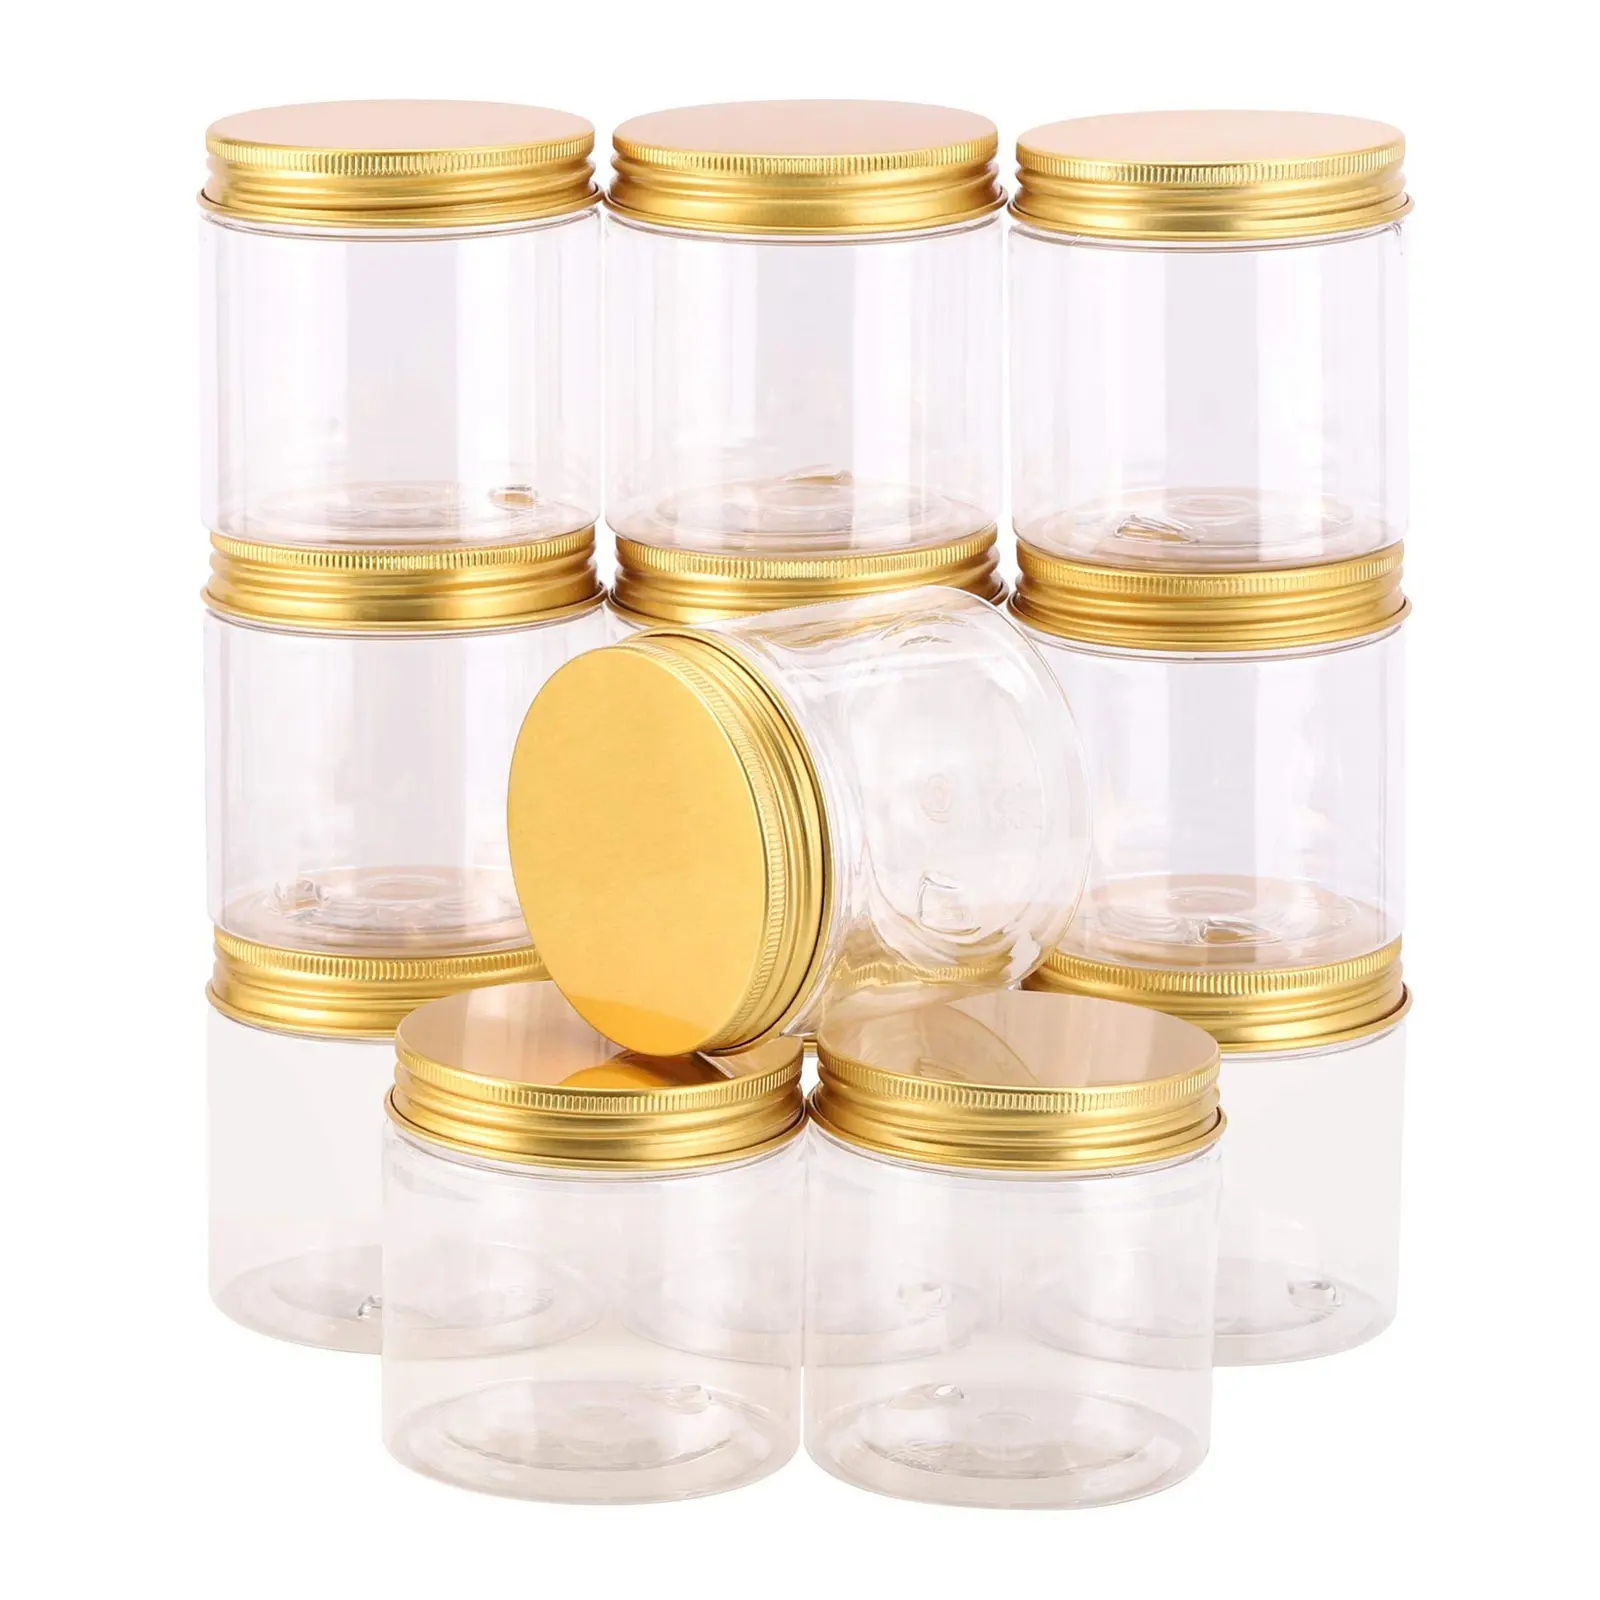 Sichuan Renhao alimentos cosméticos embalaje 200ml 6,8 oz tarro de plástico con tapa de aluminio dorado tarro de plástico tarros de crema facial